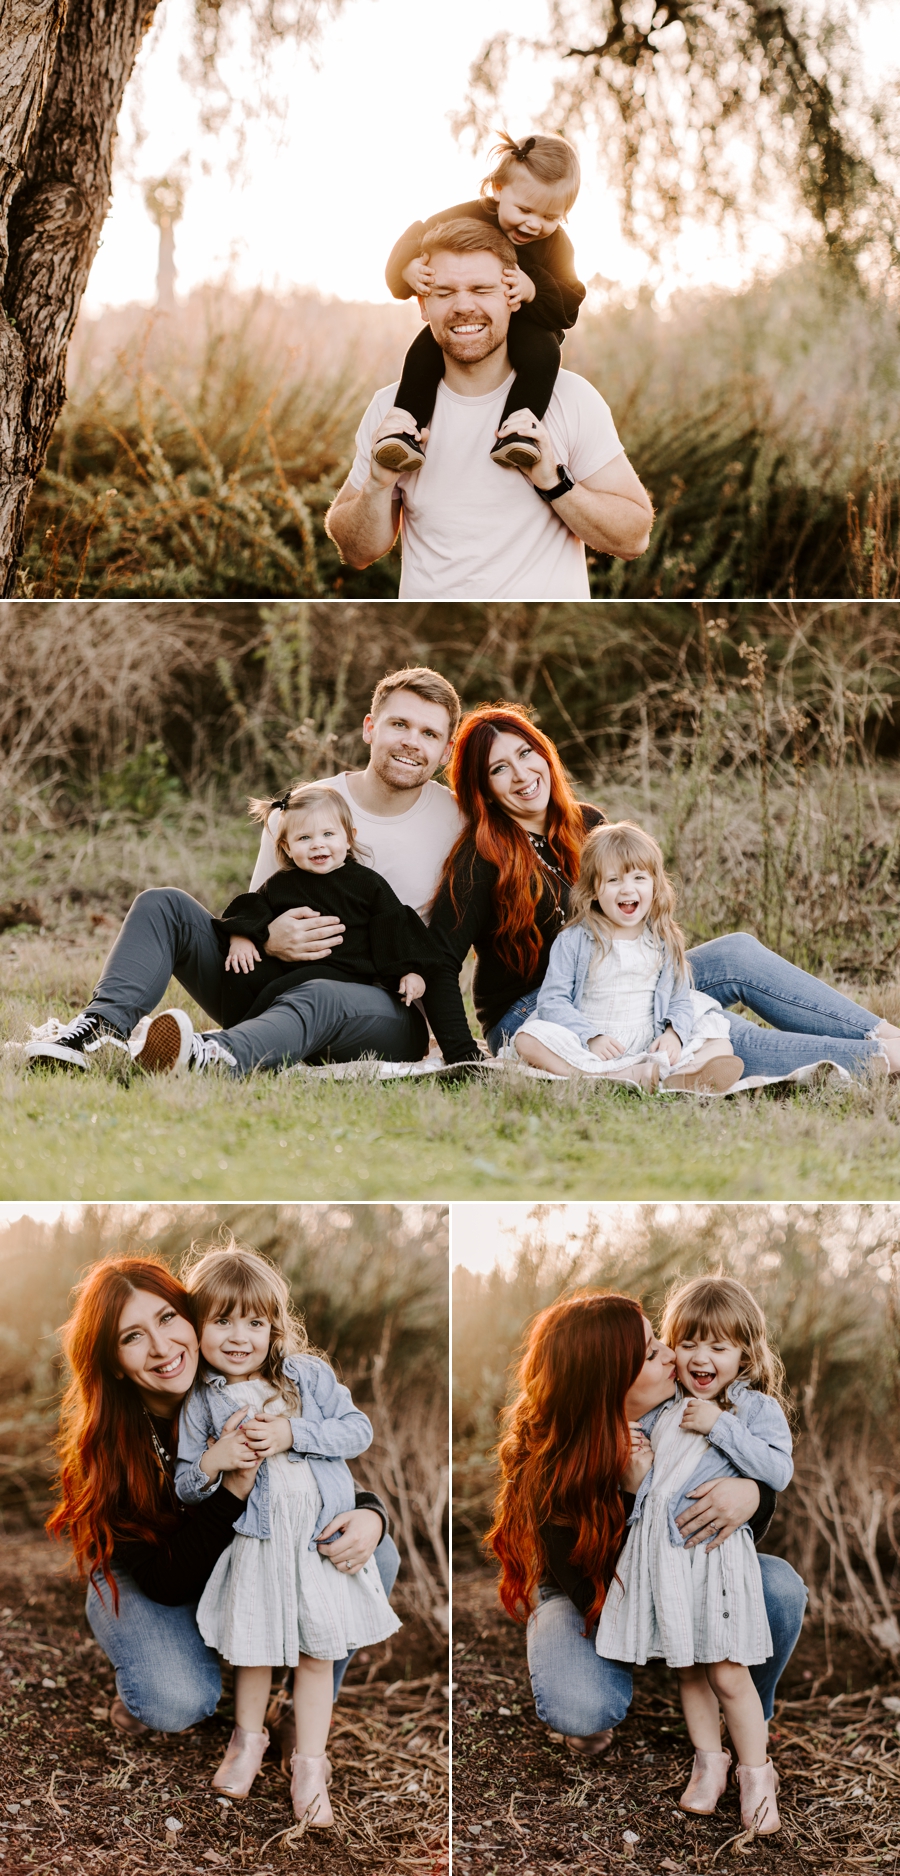 vista family photo session | Loversoflove.com